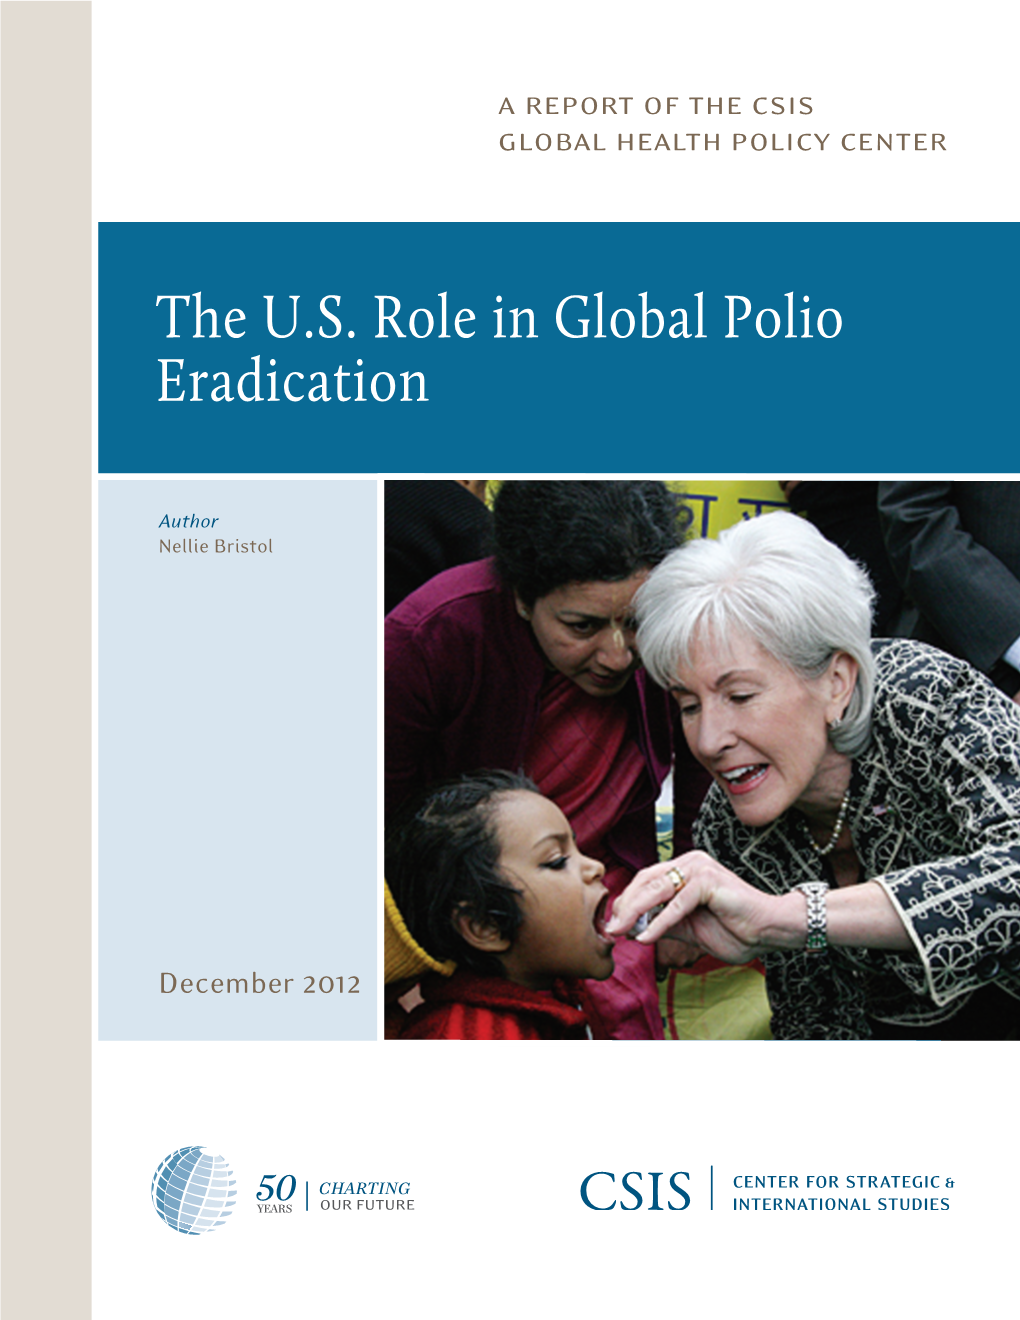 The U.S. Role in Global Polio Eradication